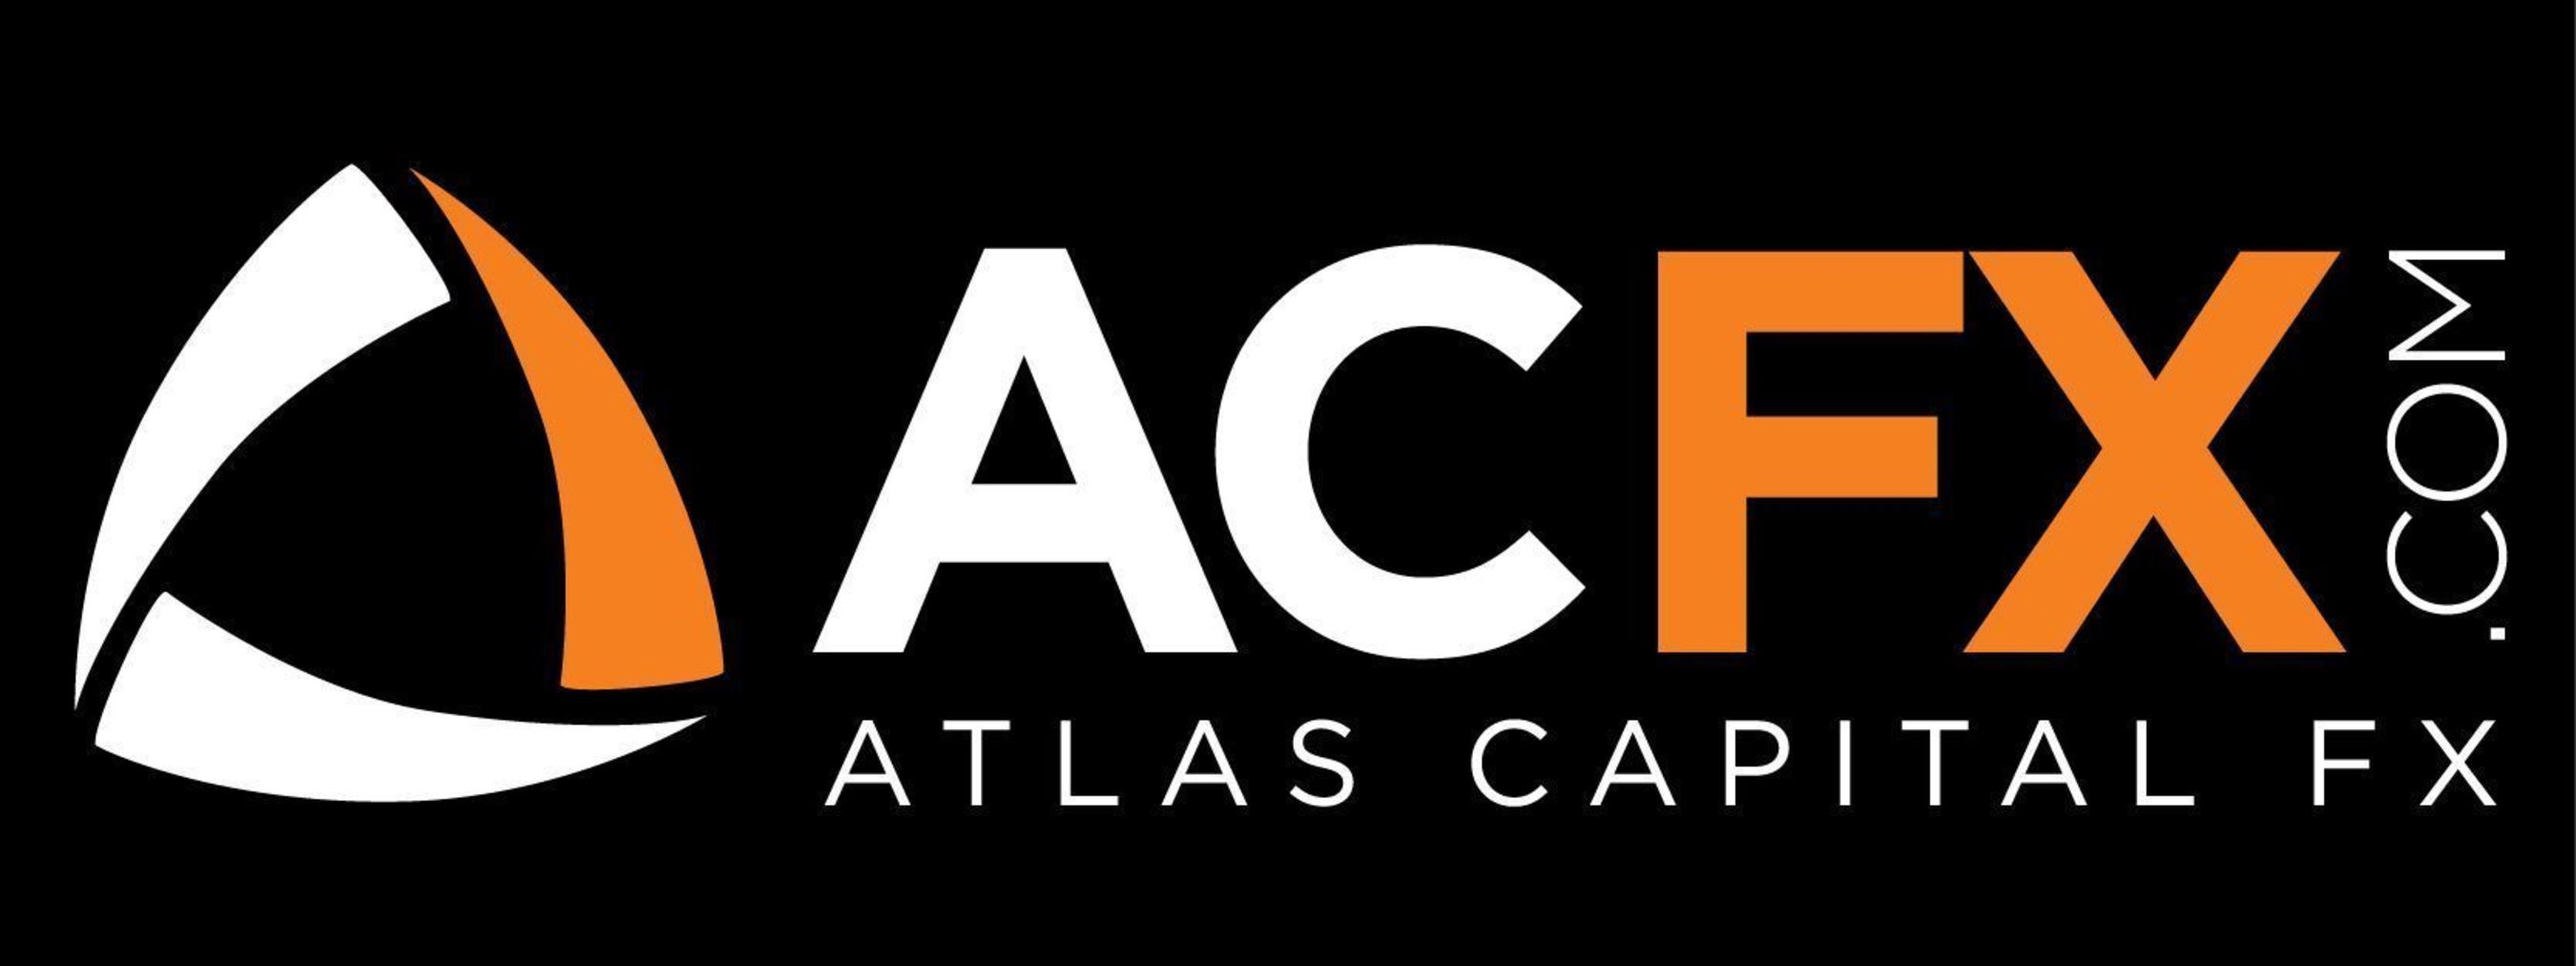 ACFX Logo (PRNewsFoto/ACFX)